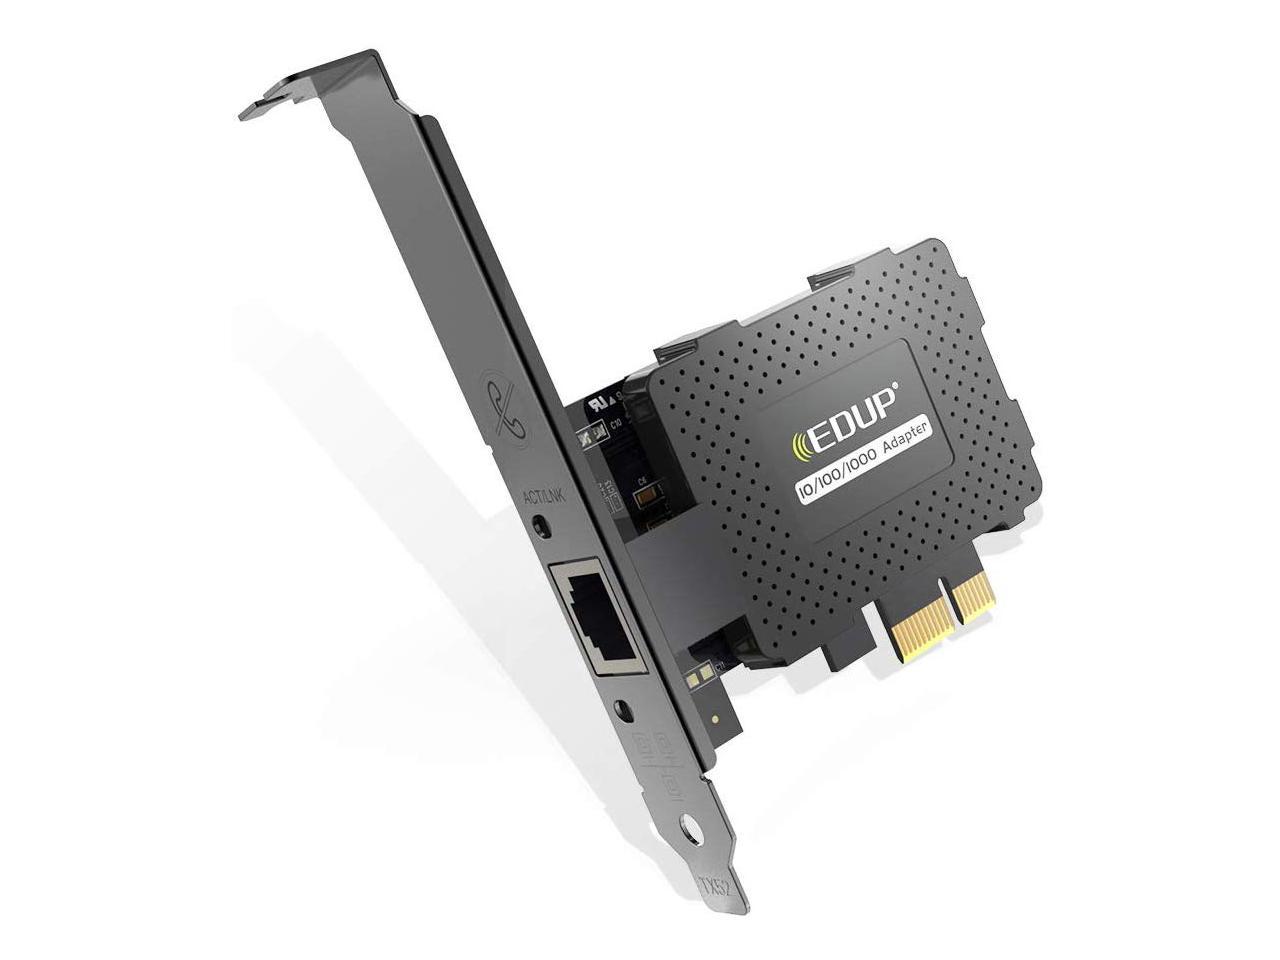 EDUP Gigabit Ethernet PCI Express PCI-E Network Card 10/100/1000Mbps RJ45  LAN Adapter Converter for Desktop PC